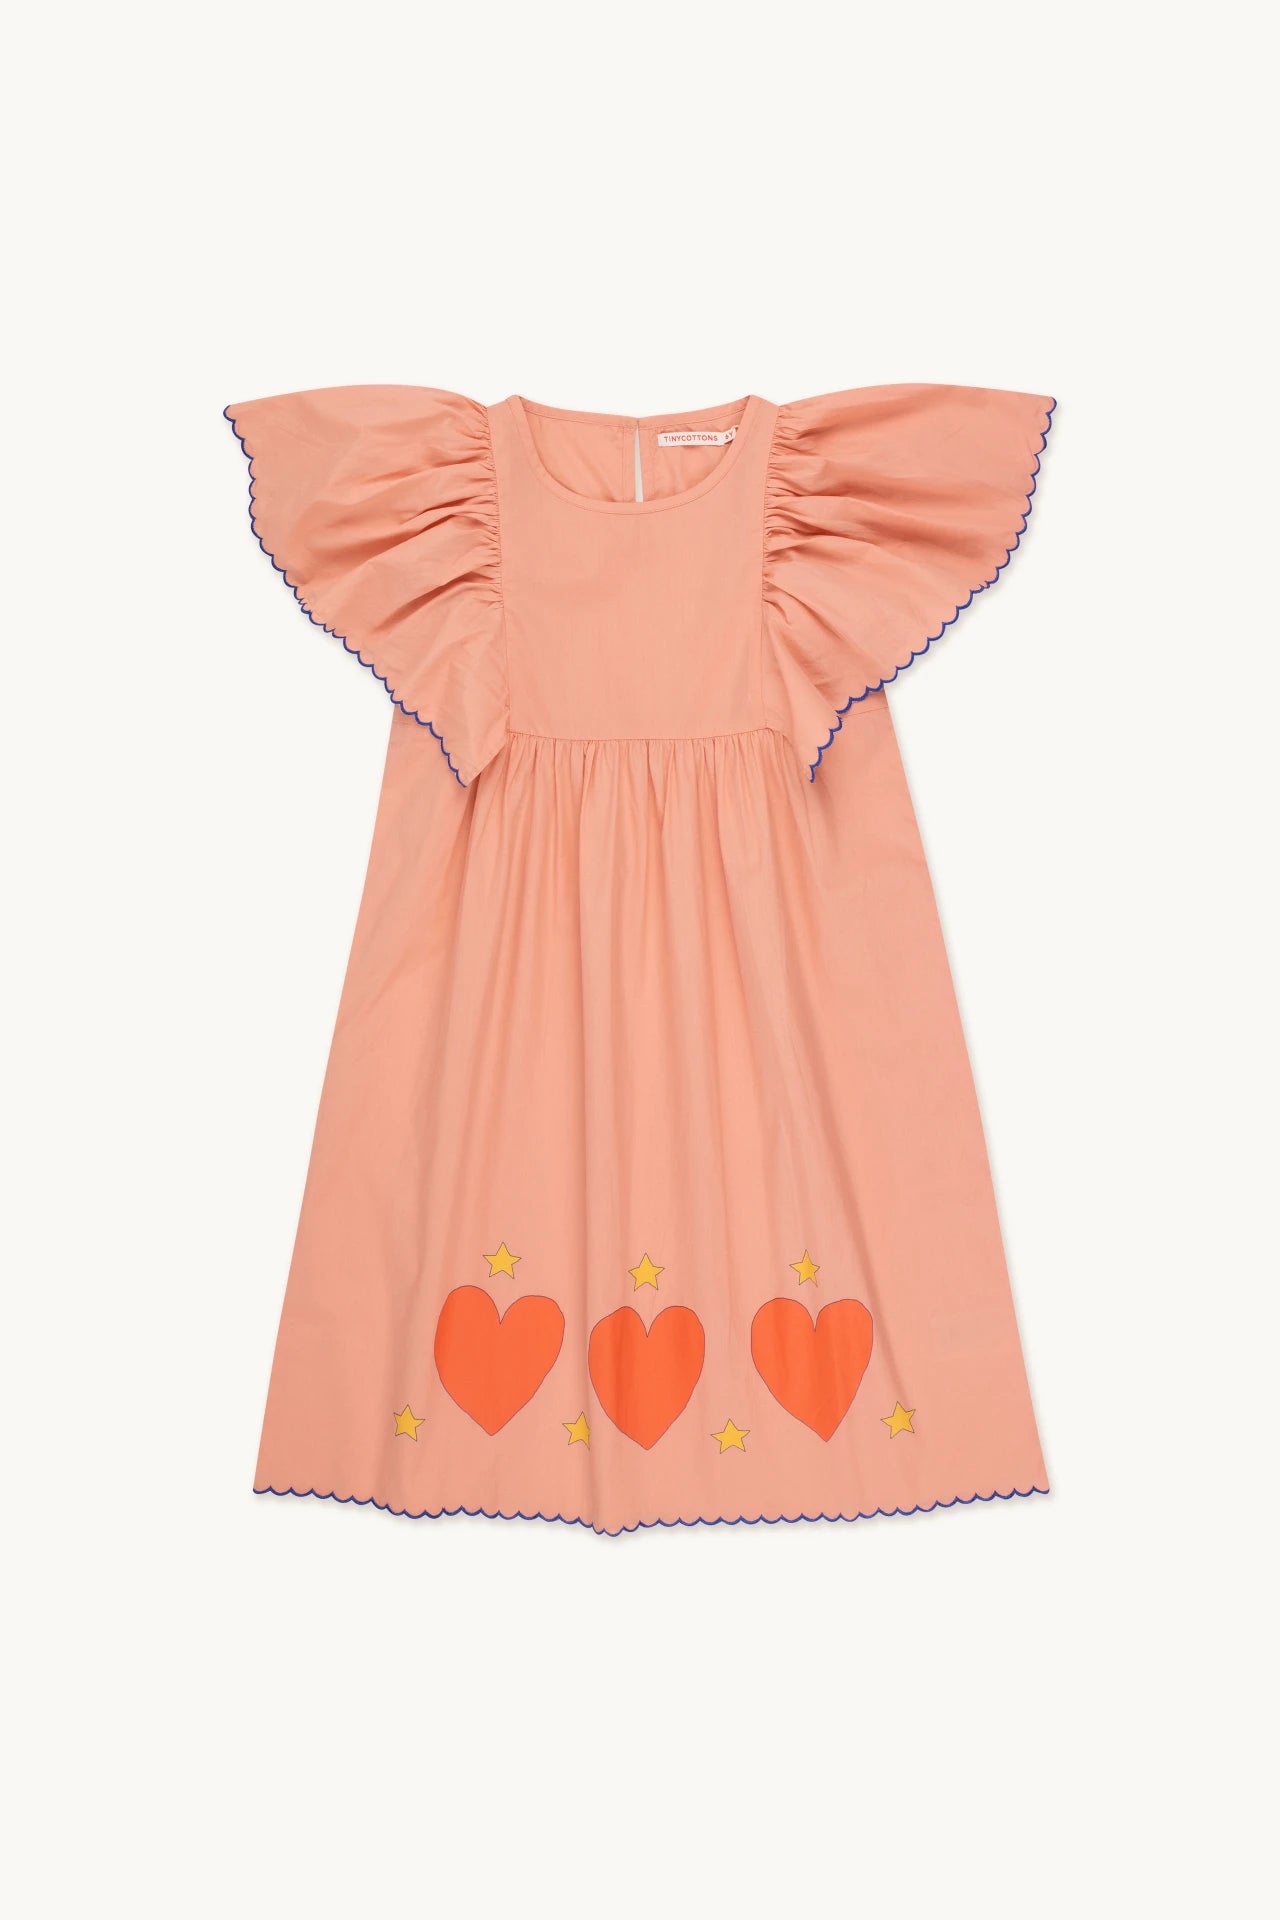 Tiny Cottons - Star Hearts Dress